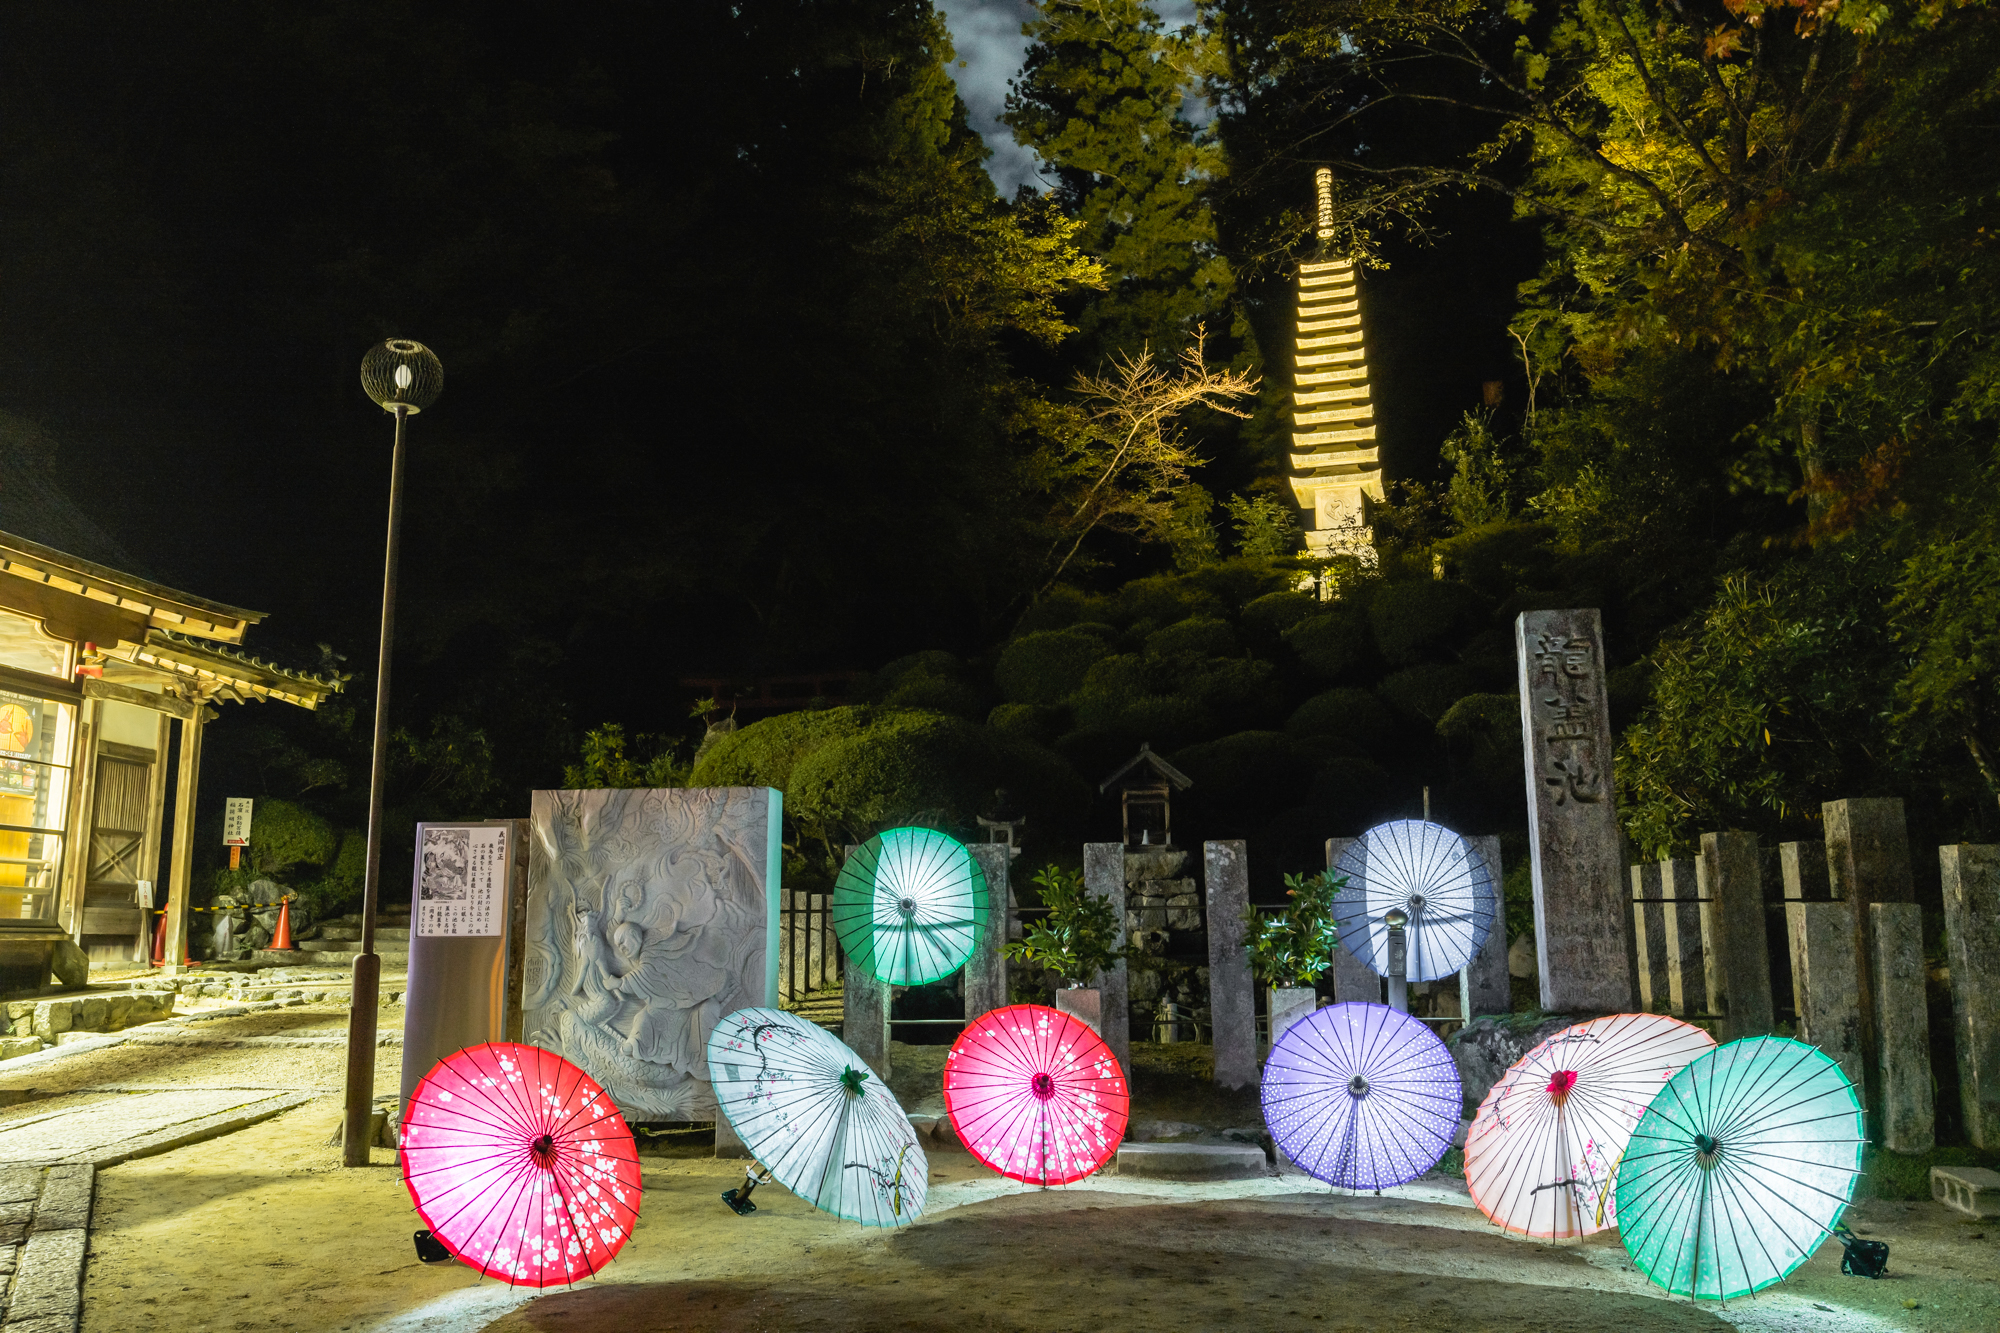 NIKON-CORPORATION_NIKON-D850_2885111410-2885208781_21317 奈良県　明日香村 飛鳥光の回廊( 奈良県の秋におすすめの幻想的なライトアップ・夜景が観れる写真スポット!撮影した写真の紹介、アクセス情報や撮影ポイントなど!)　